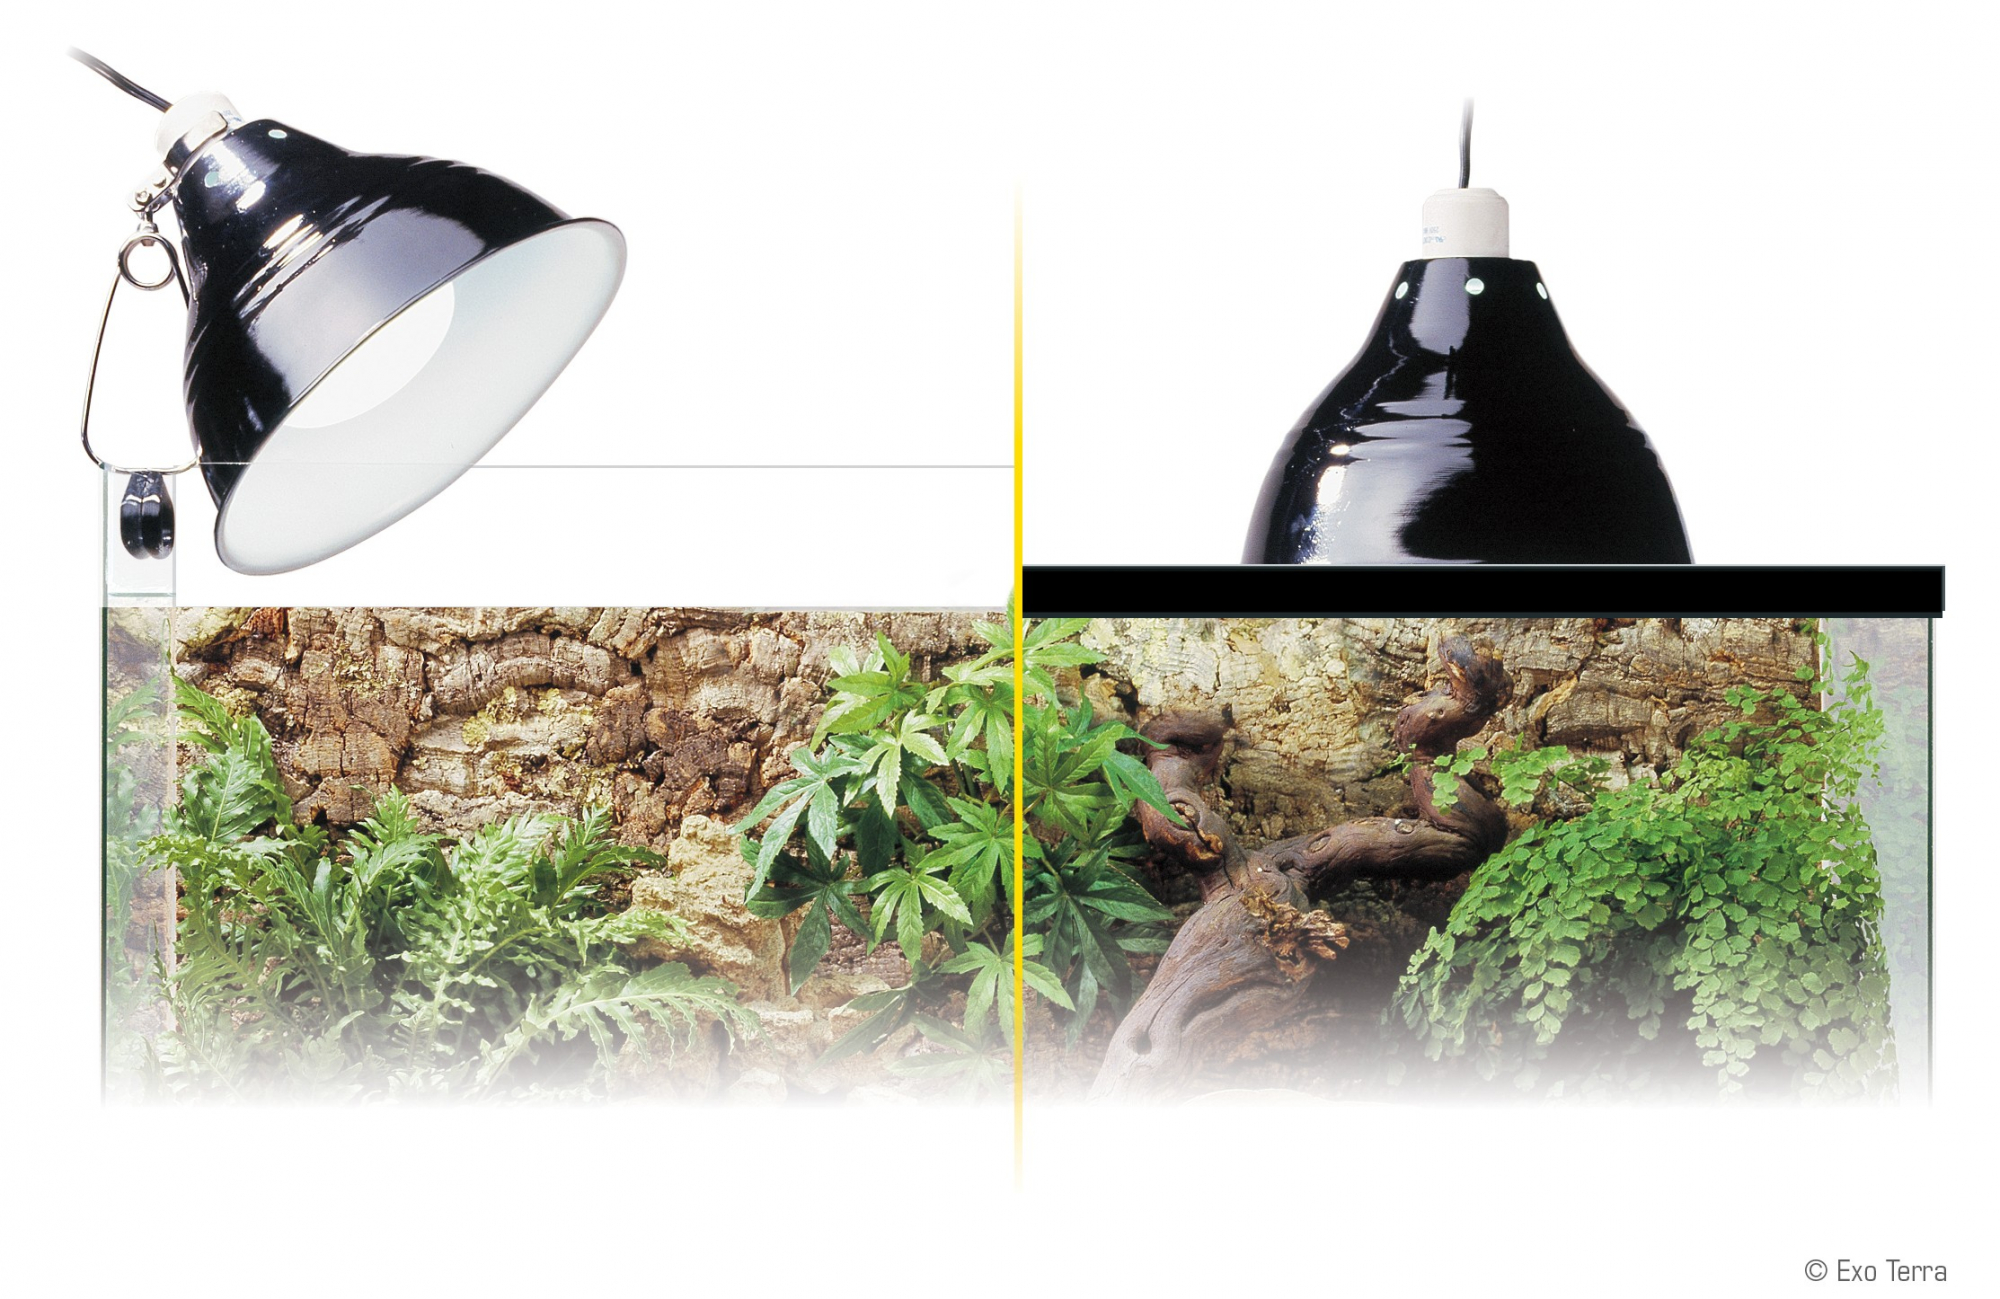 Draadlamp met porseleinen fitting Glow Light Maxi